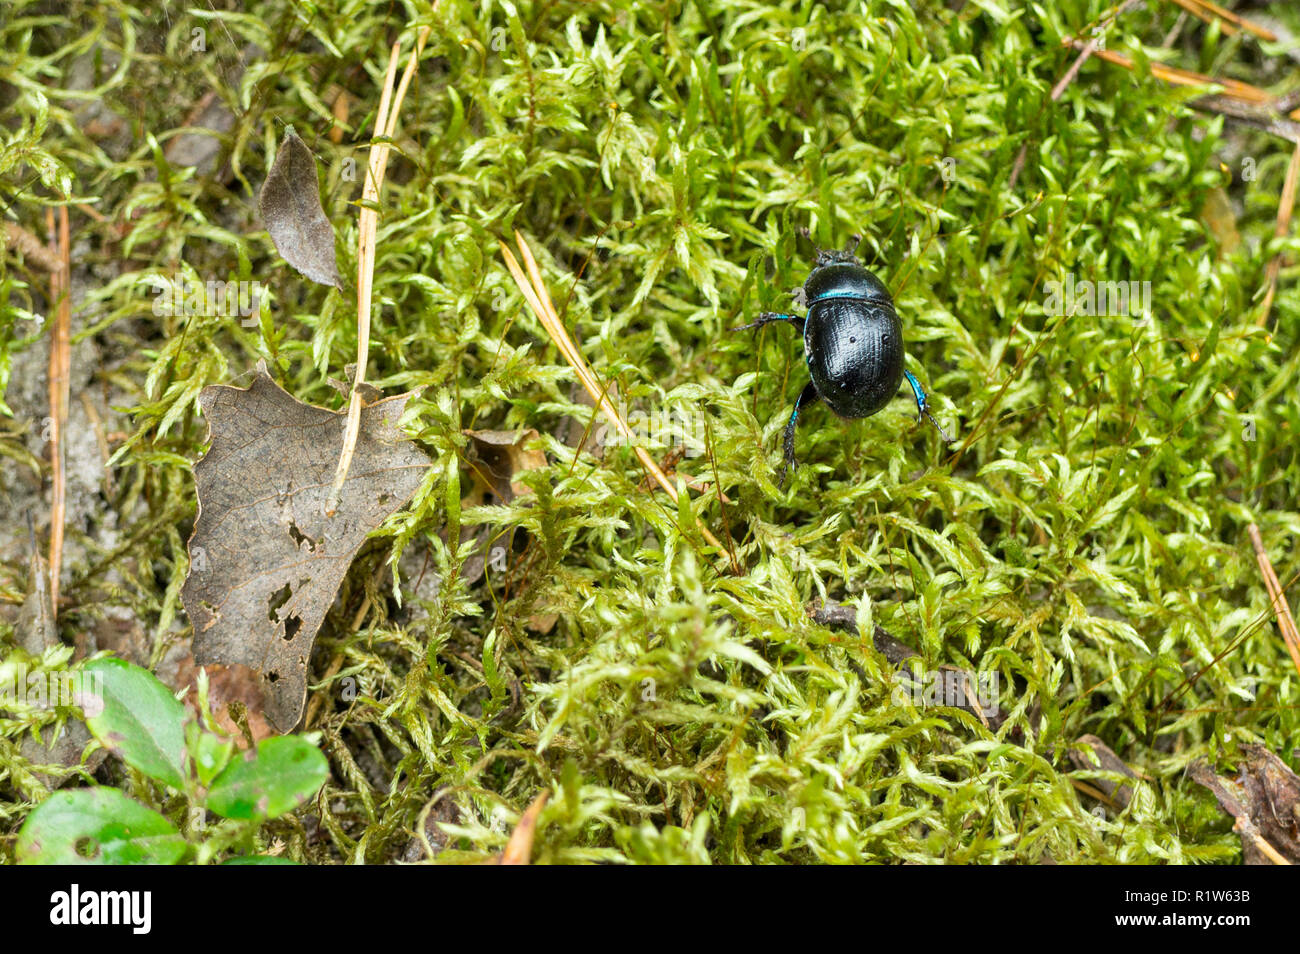 A blue dor beetle on green moss Stock Photo